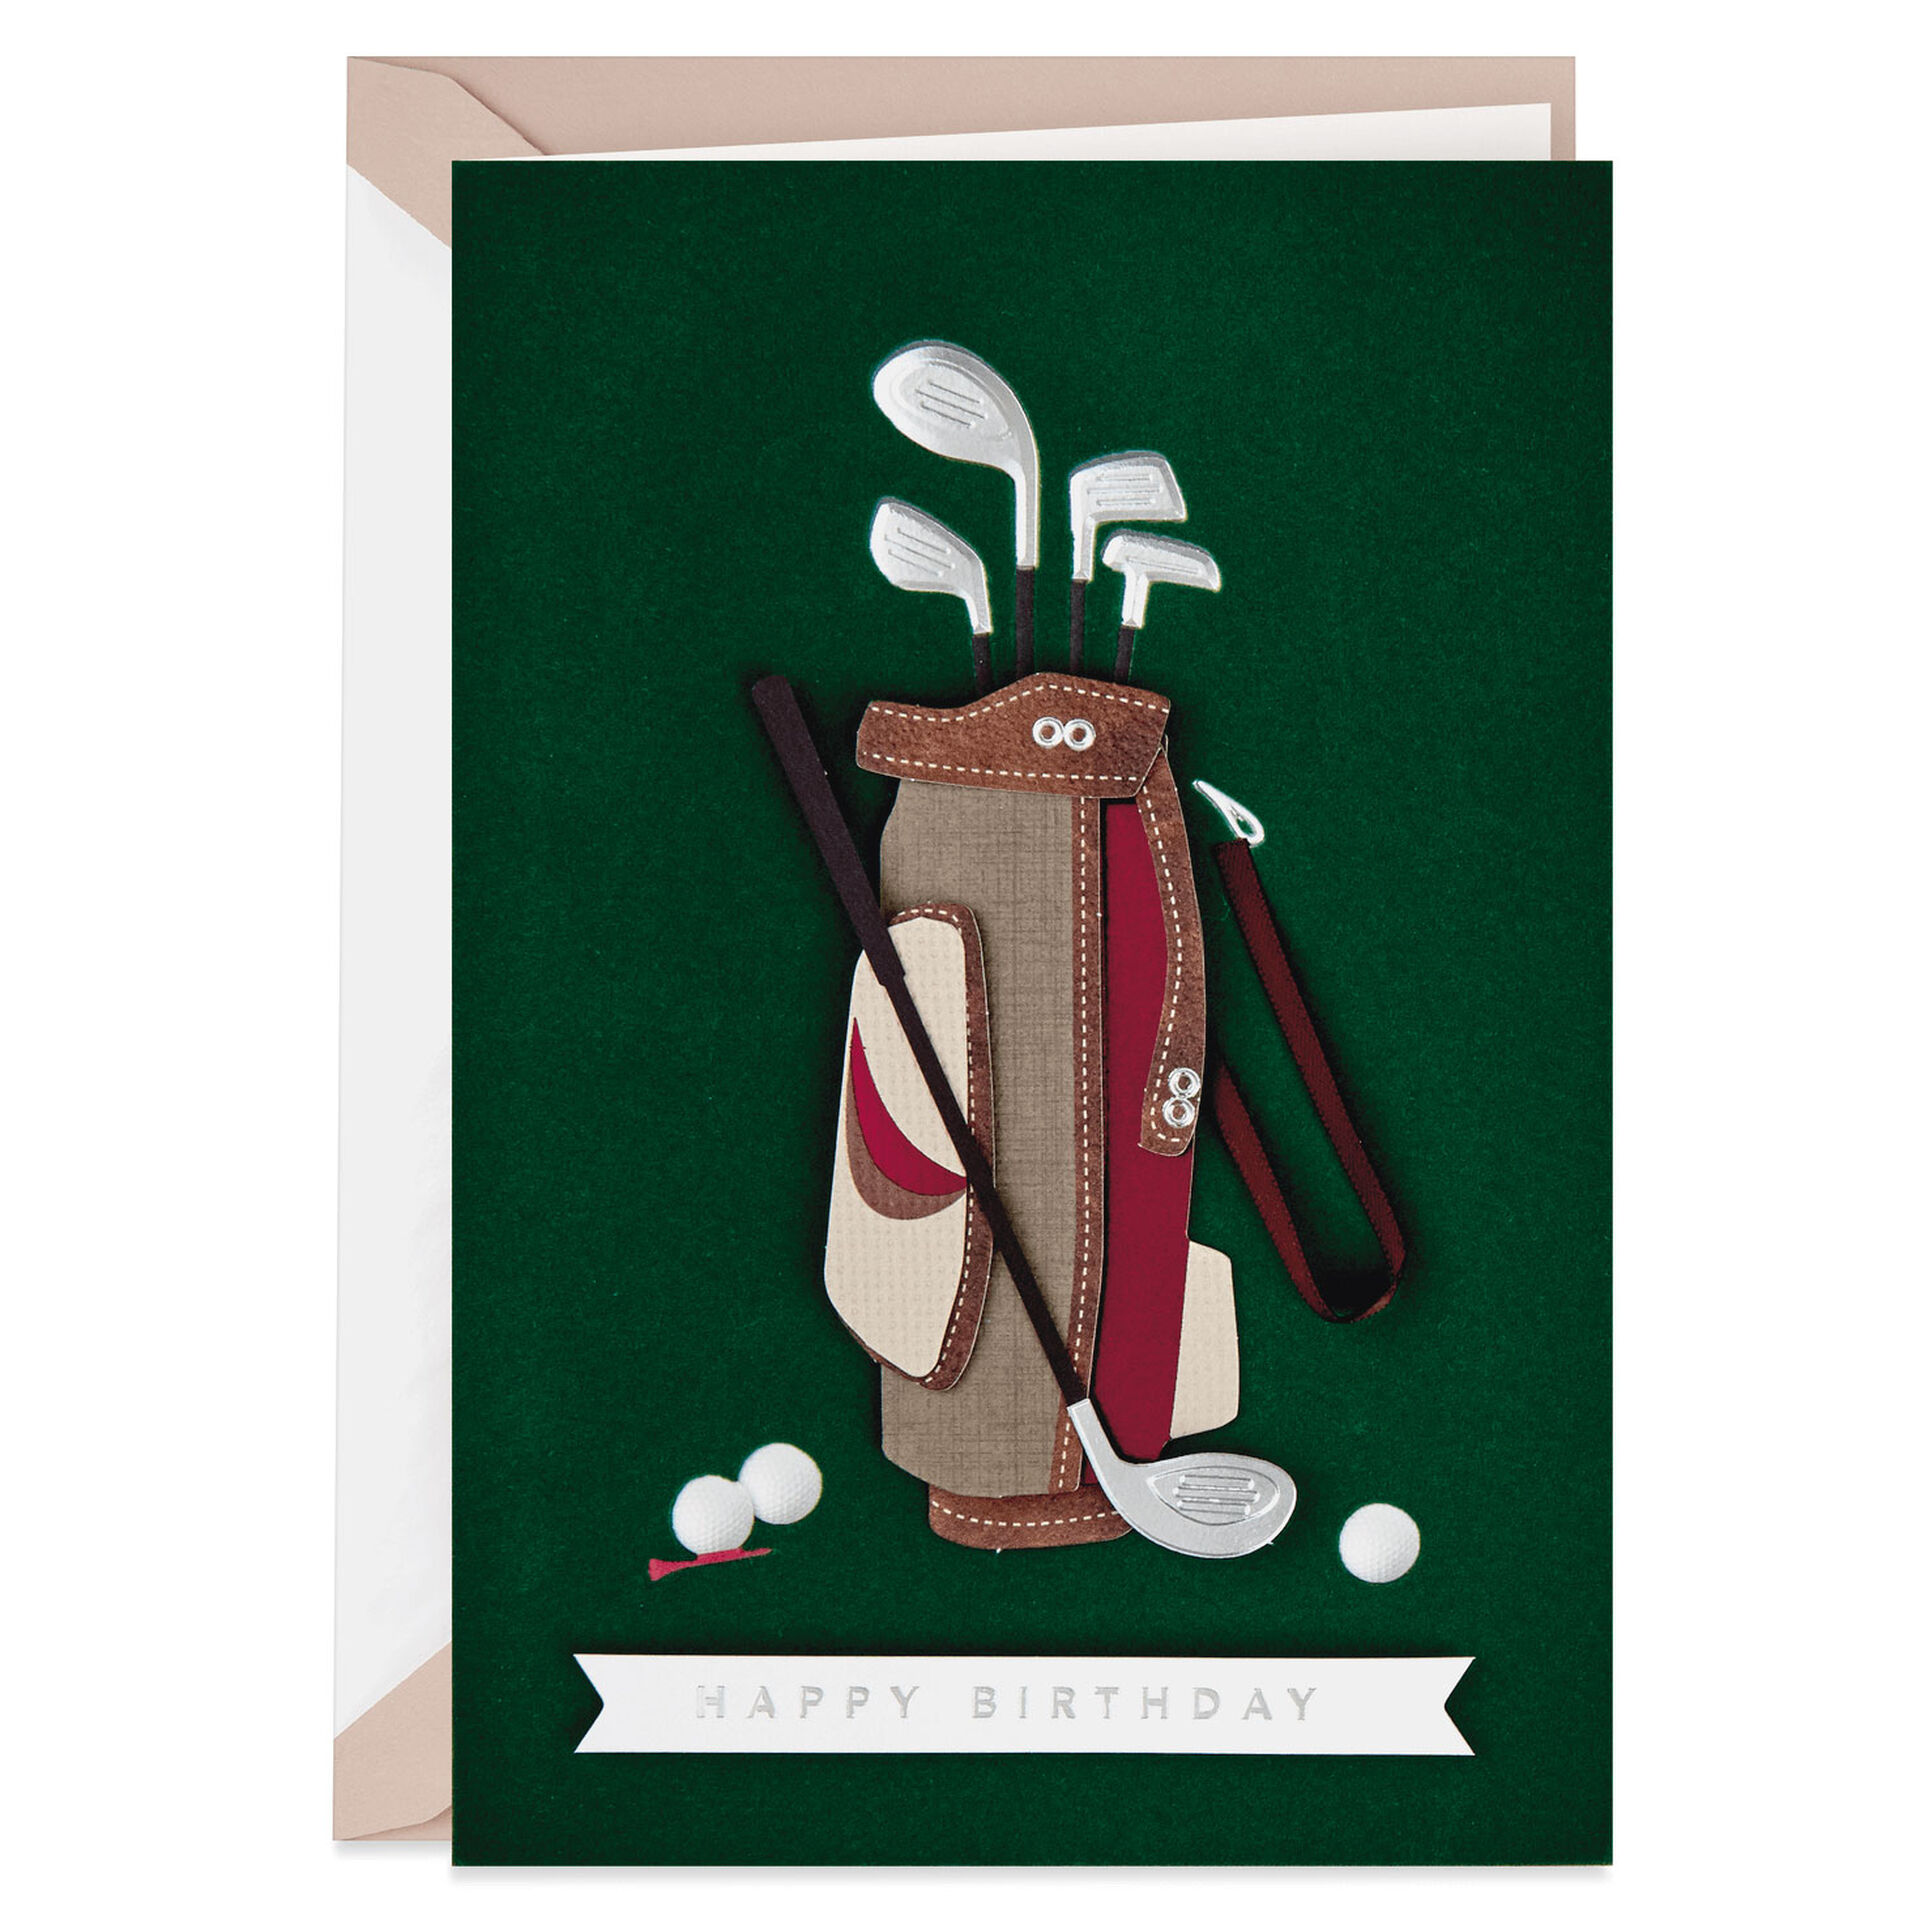 Golf-Bag-and-Clubs-Birthday-Card_799LAD8500_01